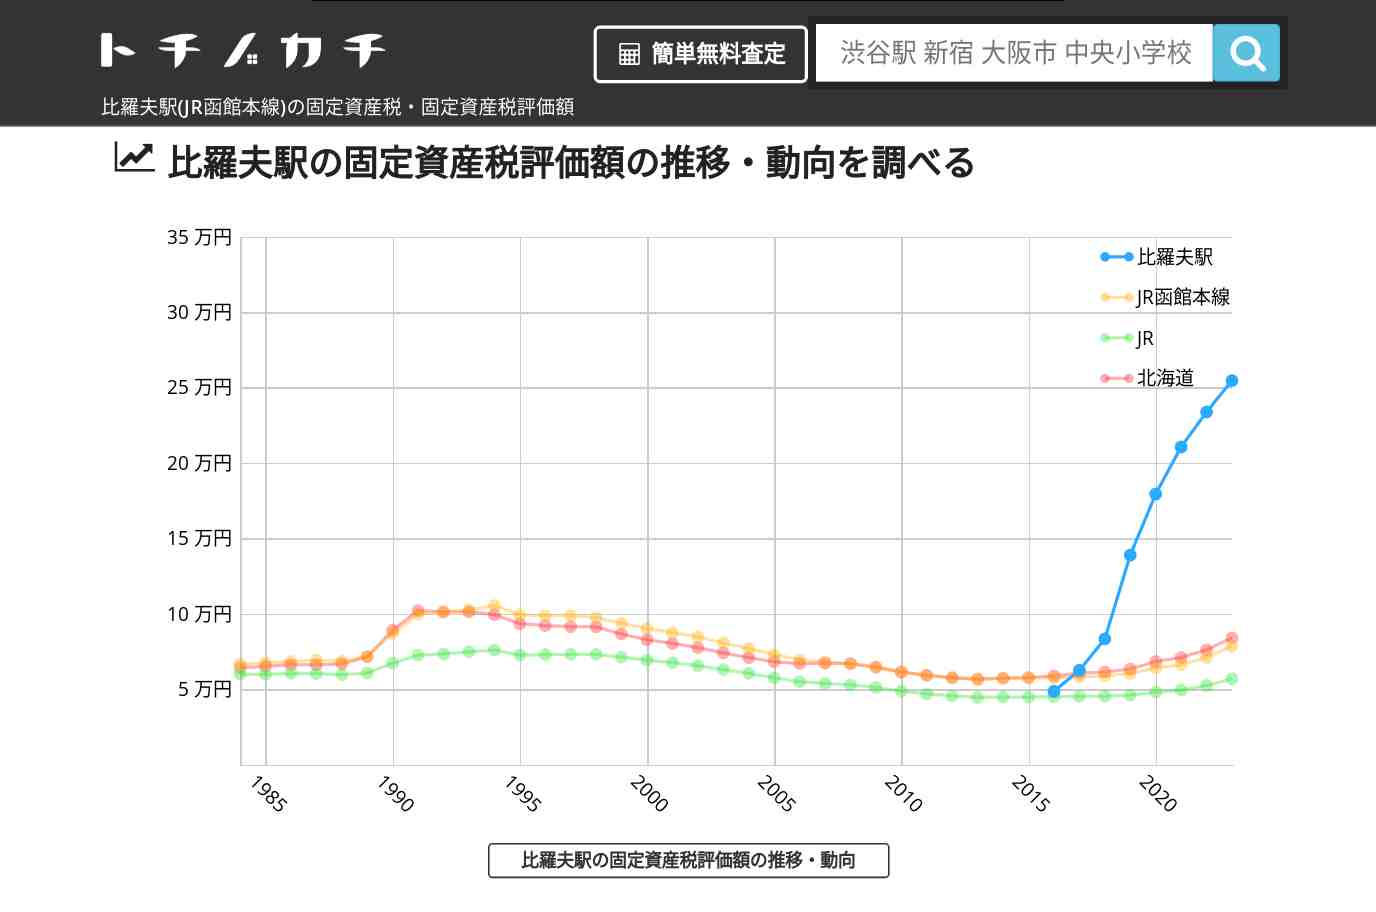 比羅夫駅(JR函館本線)の固定資産税・固定資産税評価額 | トチノカチ